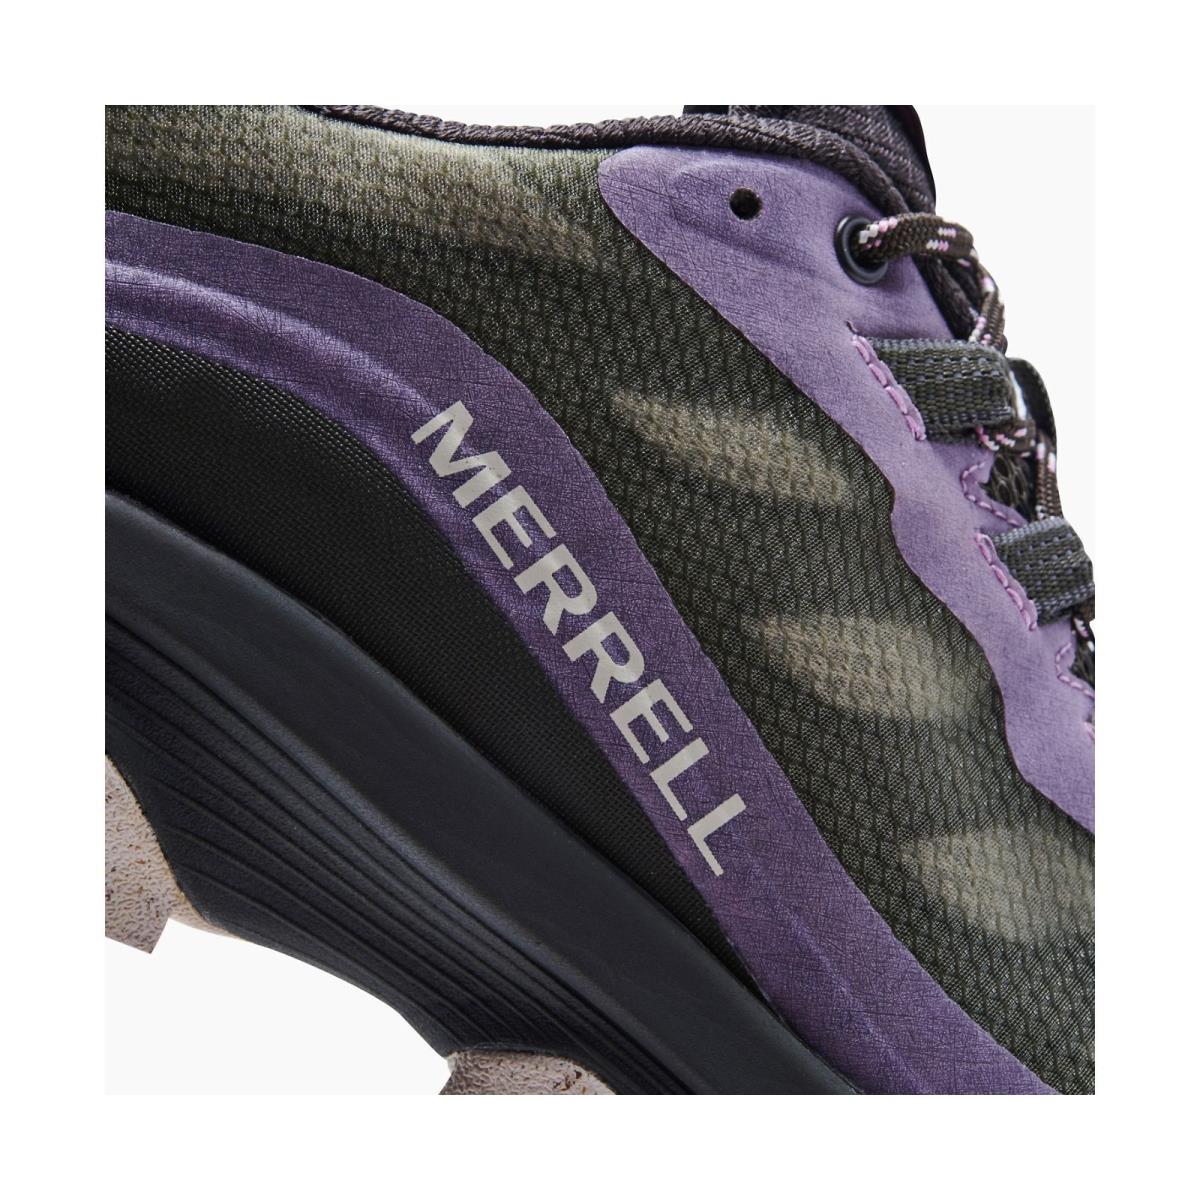 Merrell shoes moab 11